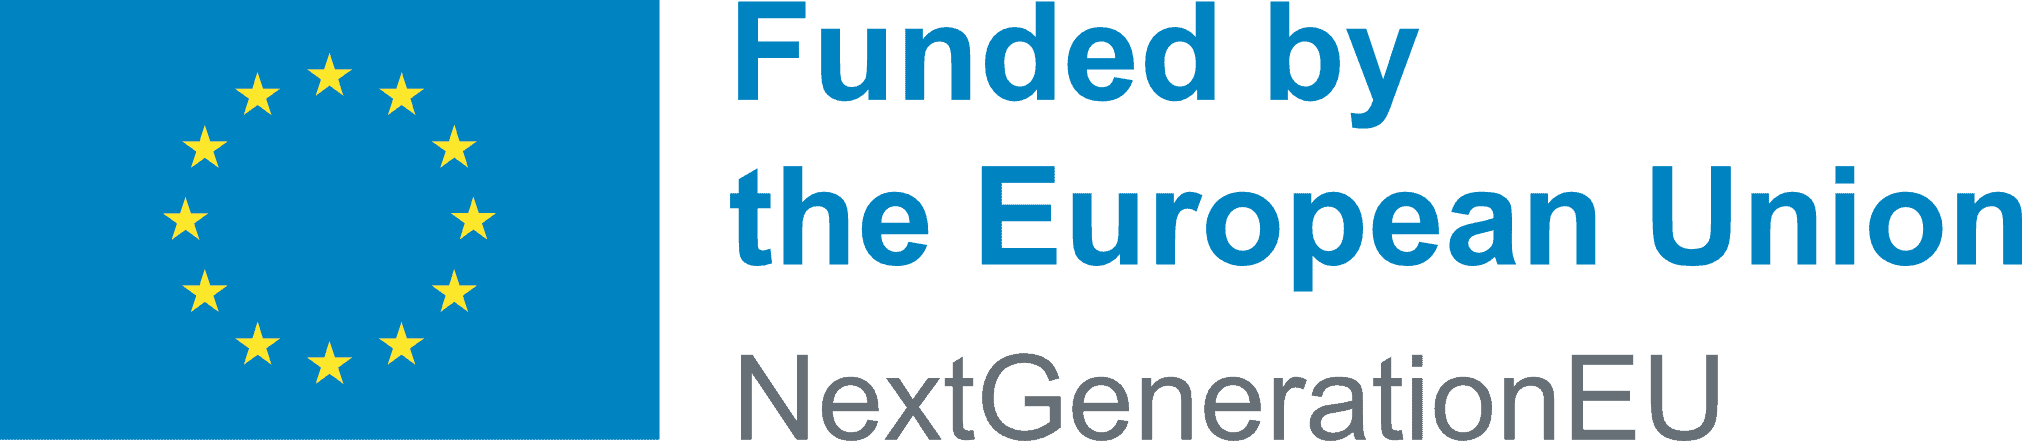 NextGeneration-EU